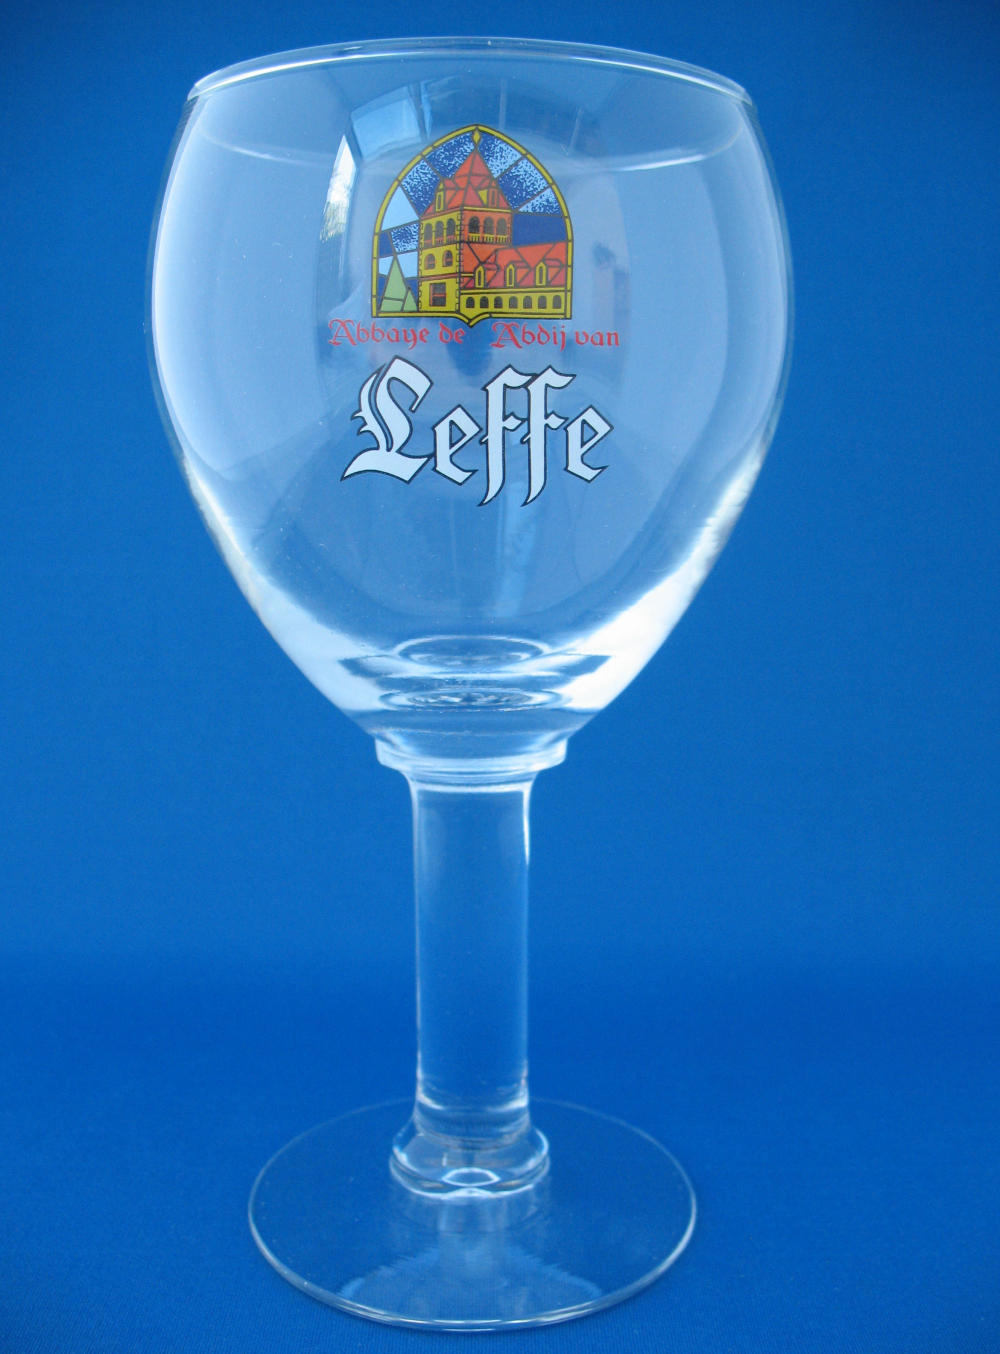 Leffe Beer Glass 000336B017